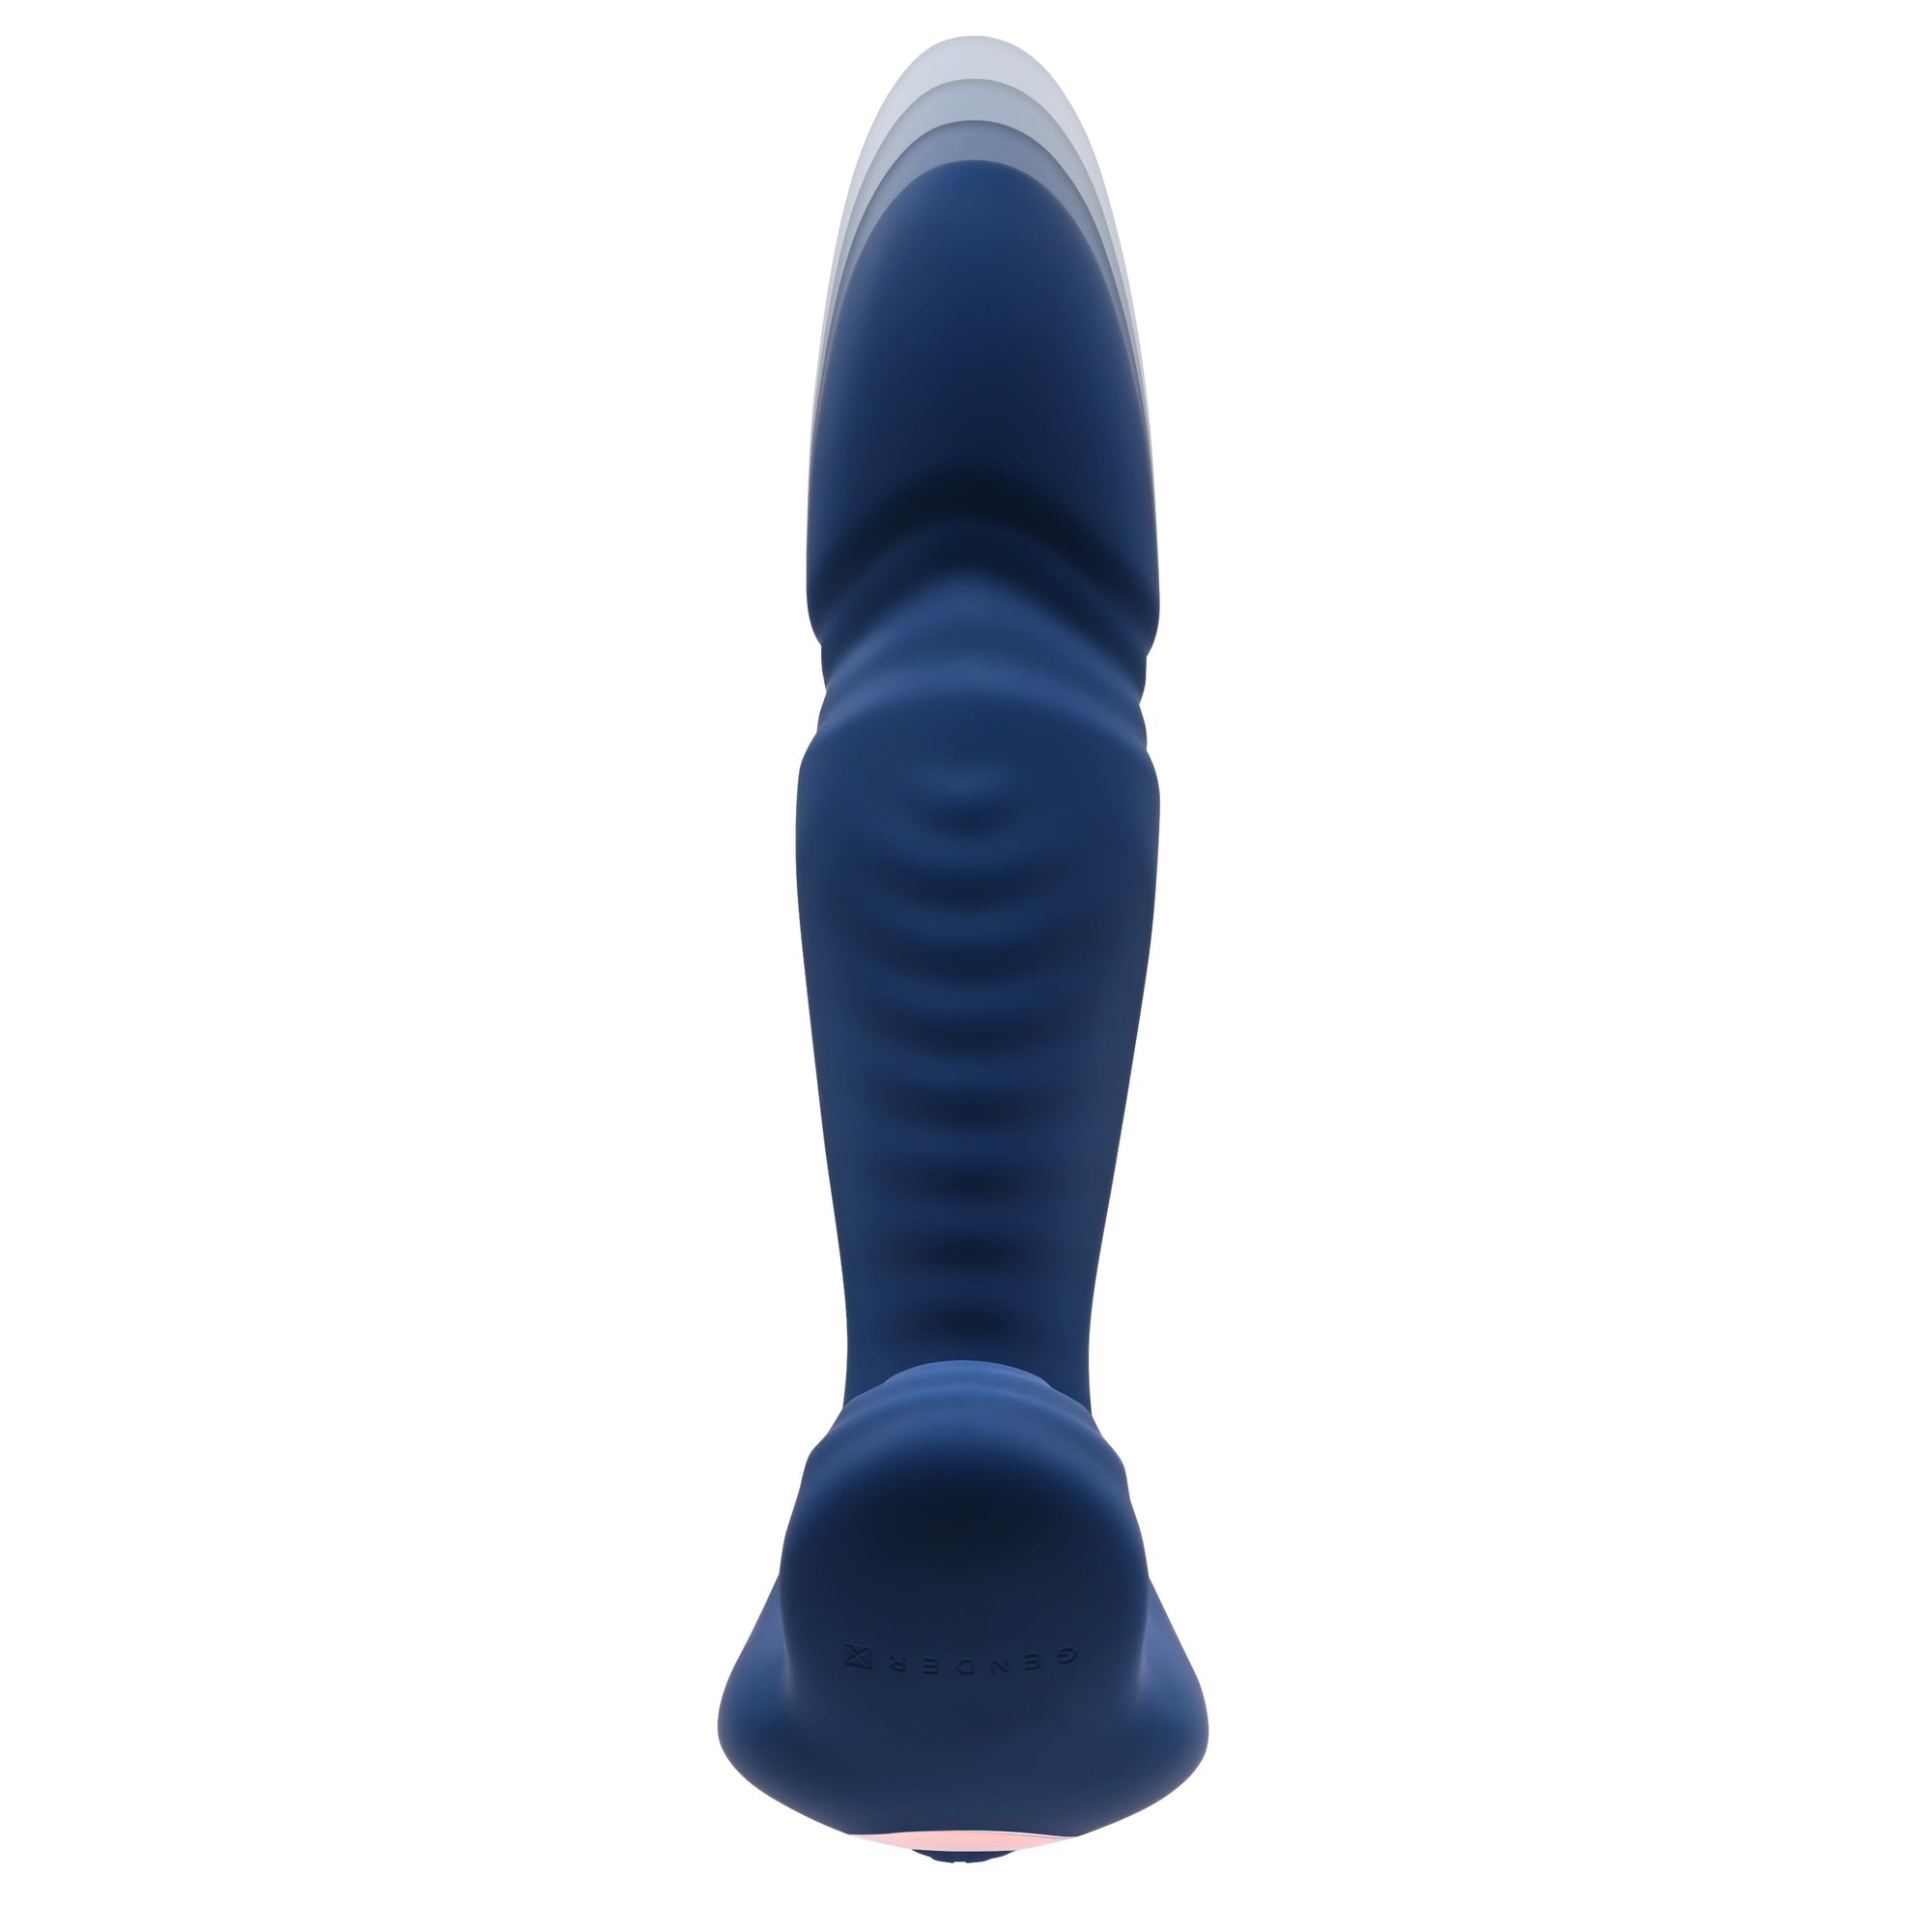 Evolved - Gender X True Blue 前列腺按摩器 (蓝色)